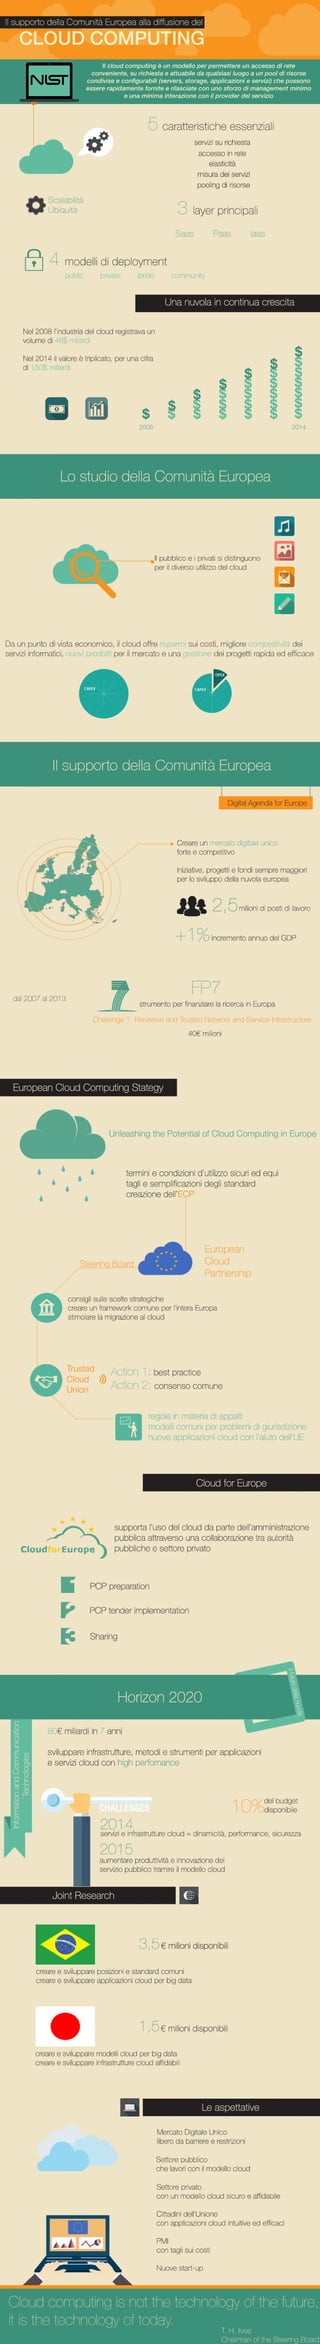 Information Management - EU and Cloud Computing